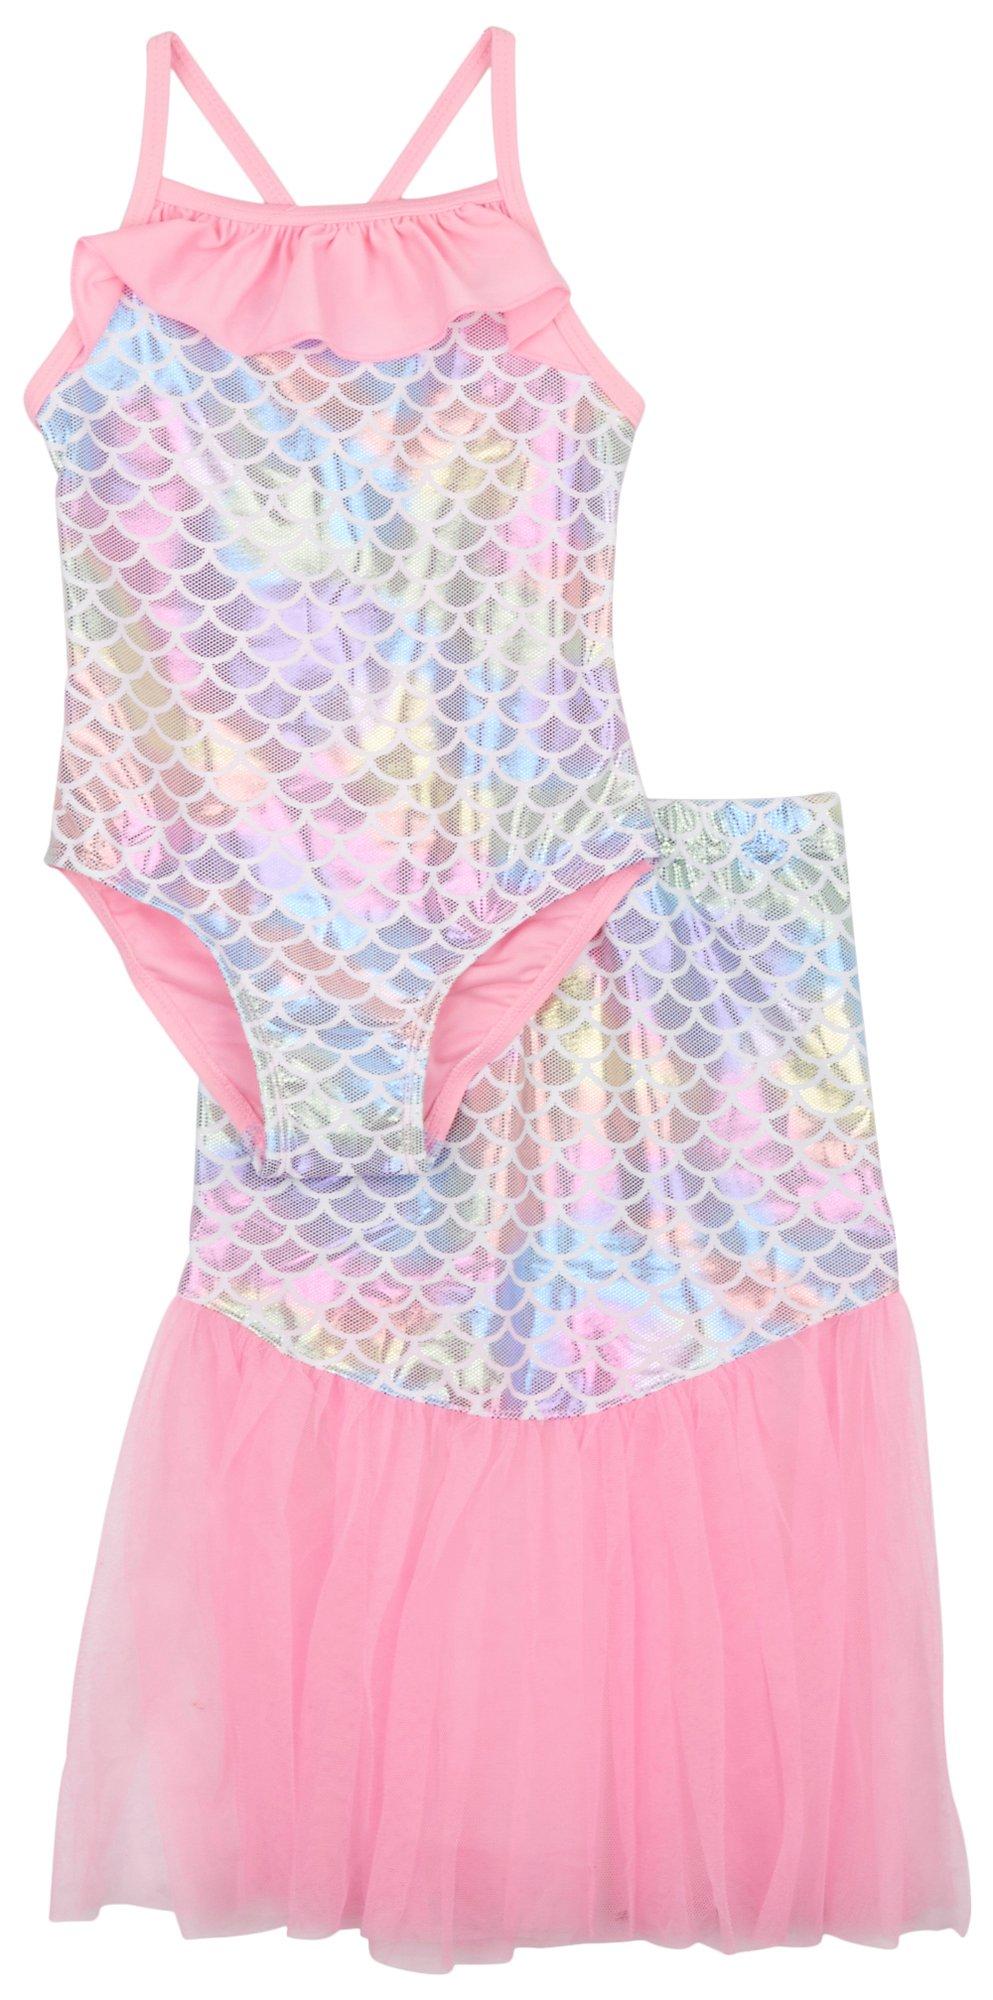 Floatimini Toddler Girls 2 Pc. Mermaid Suit + Skirt Set